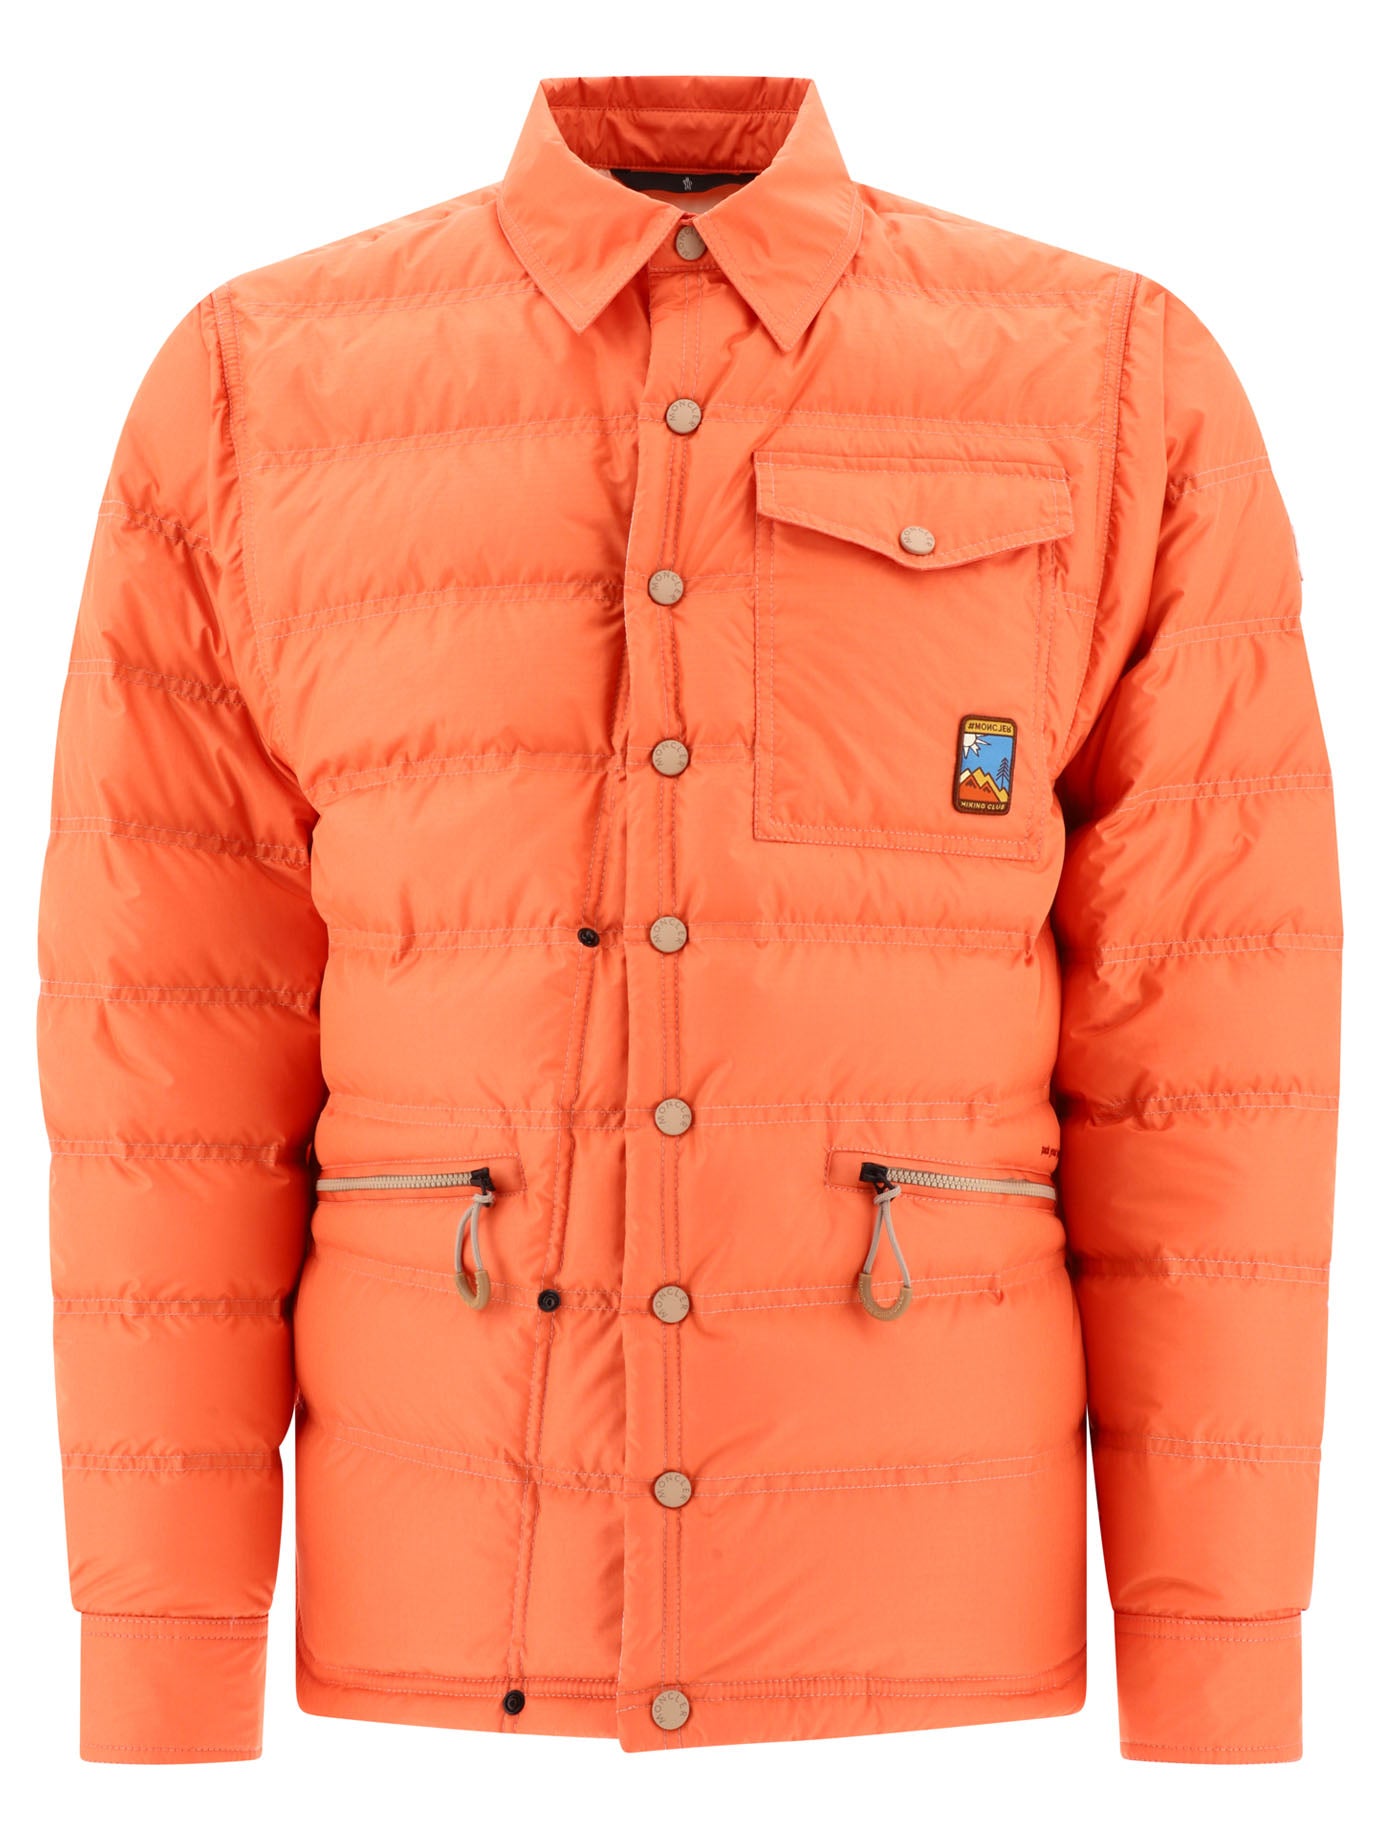 Moncler Men's Orange Down Jacket: Regular Fit With Logo Patch